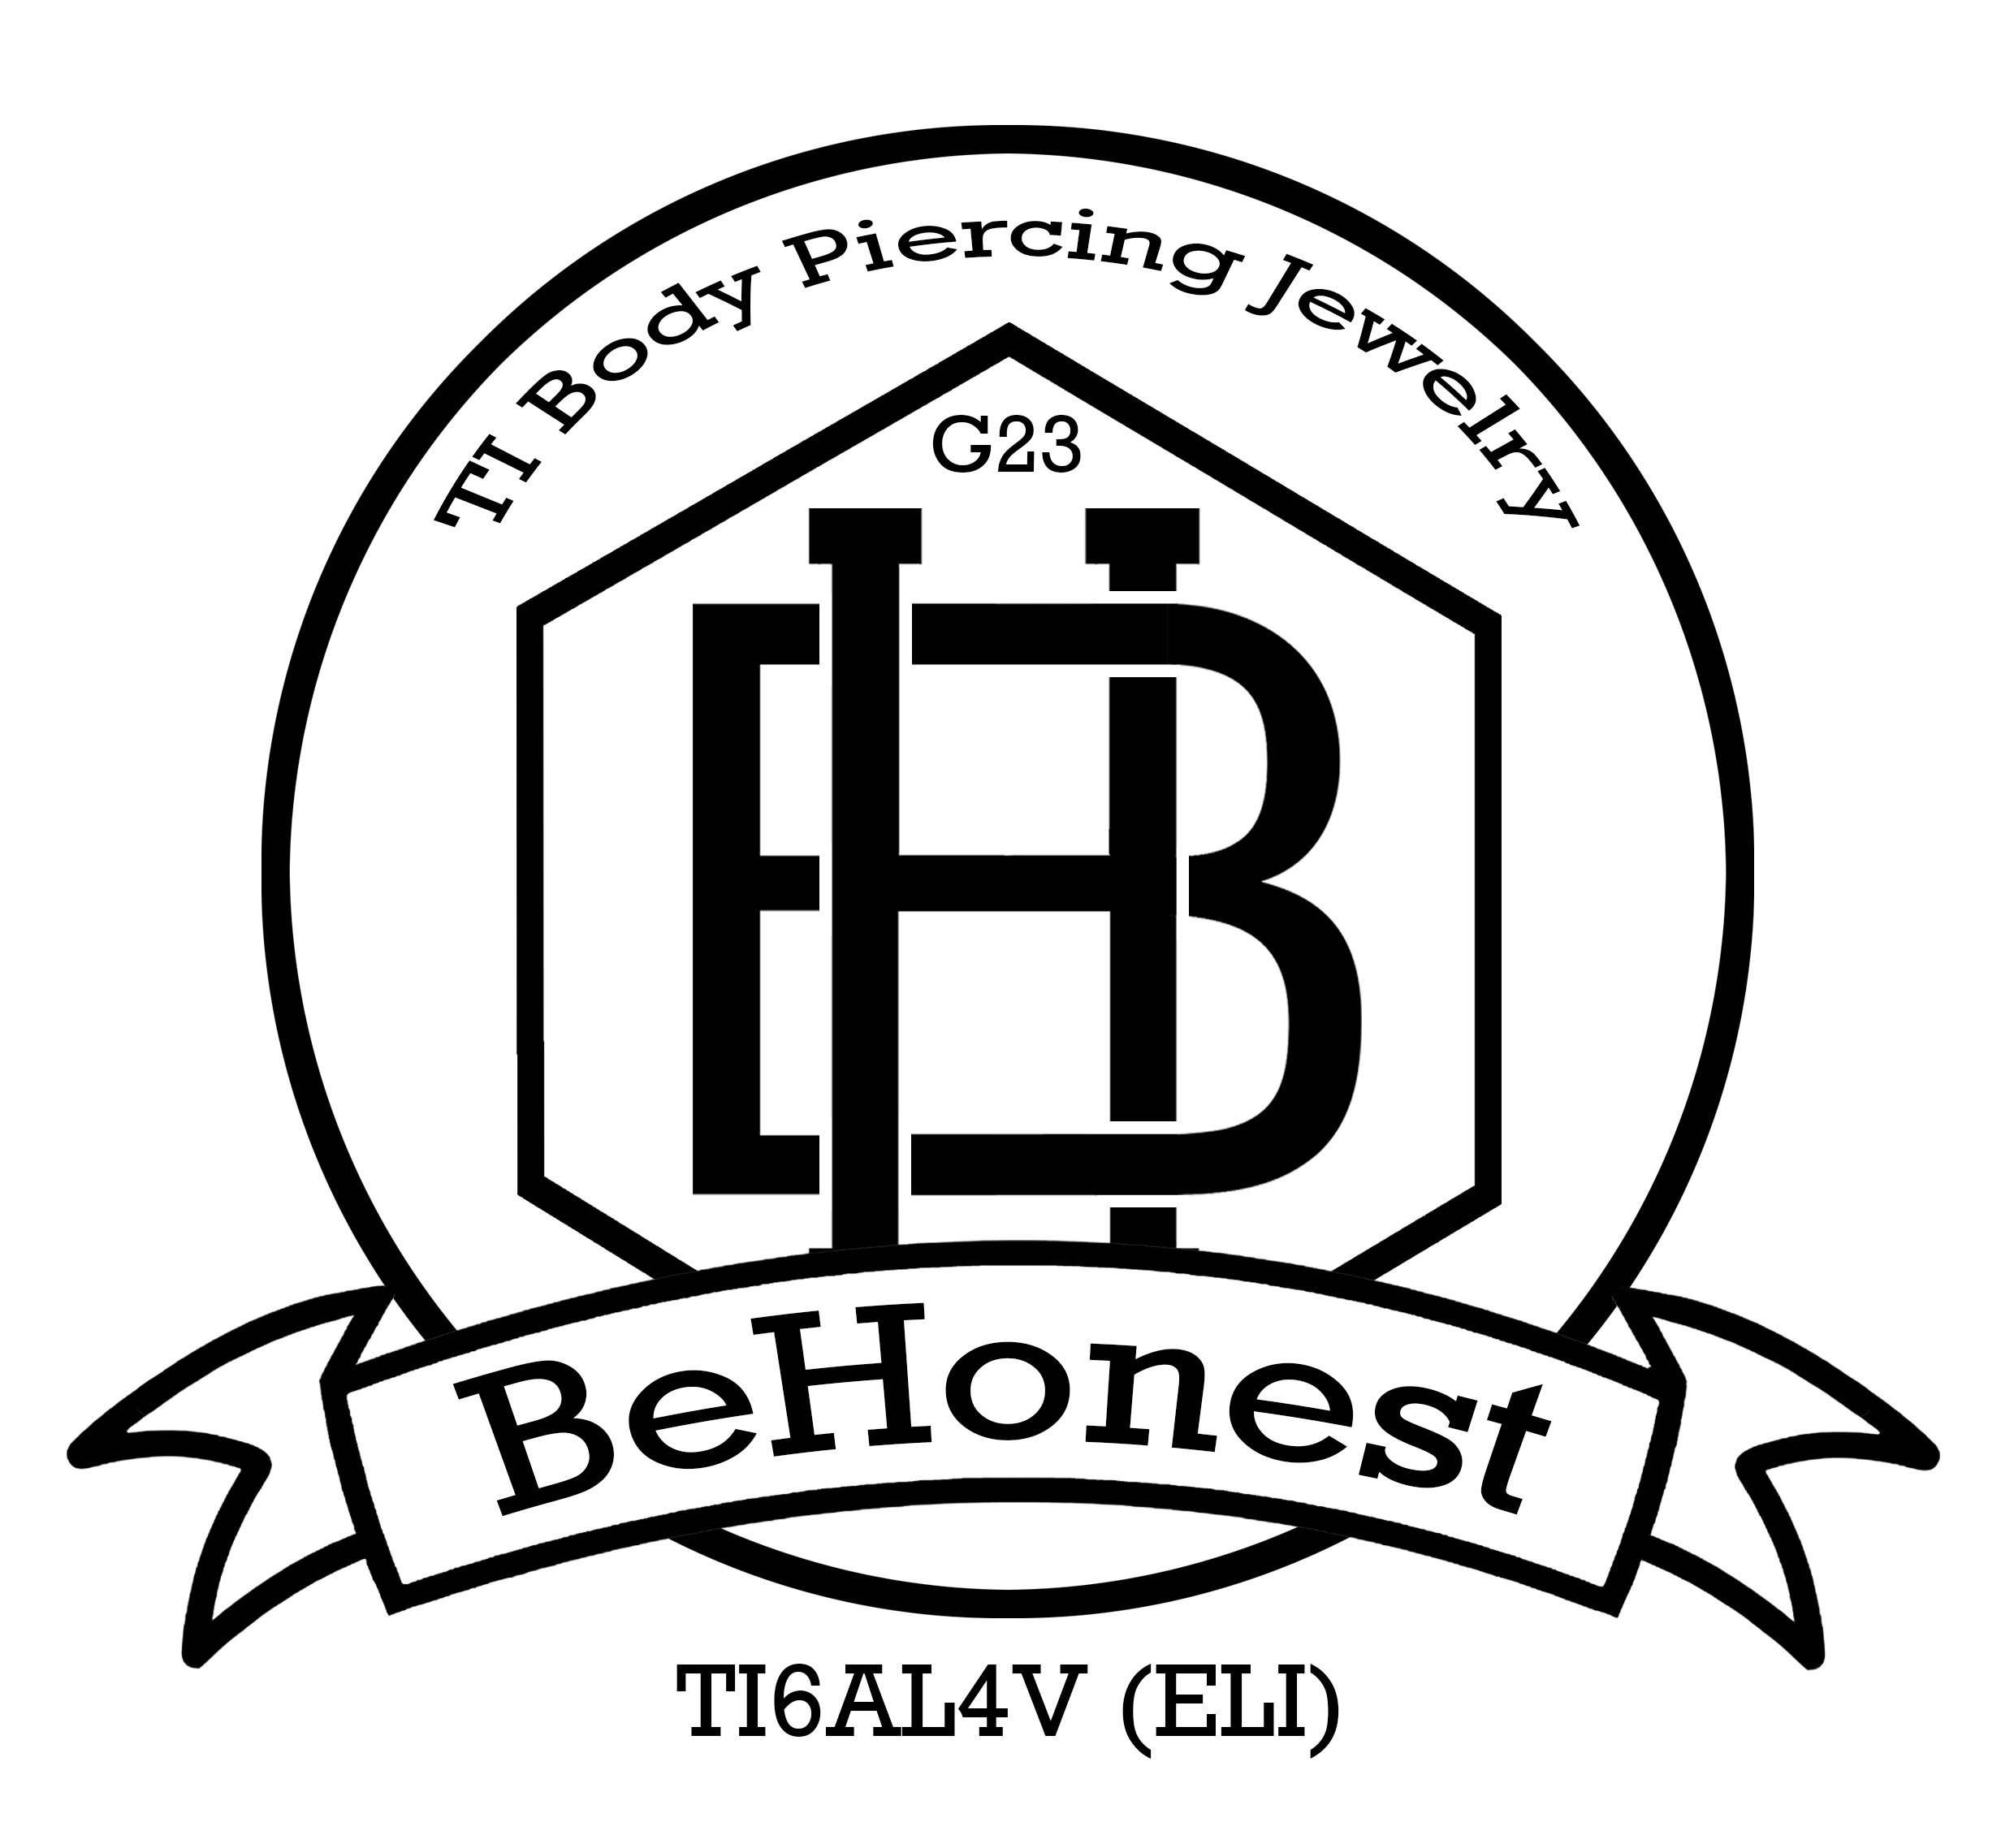 BeHonest TI Jewelry